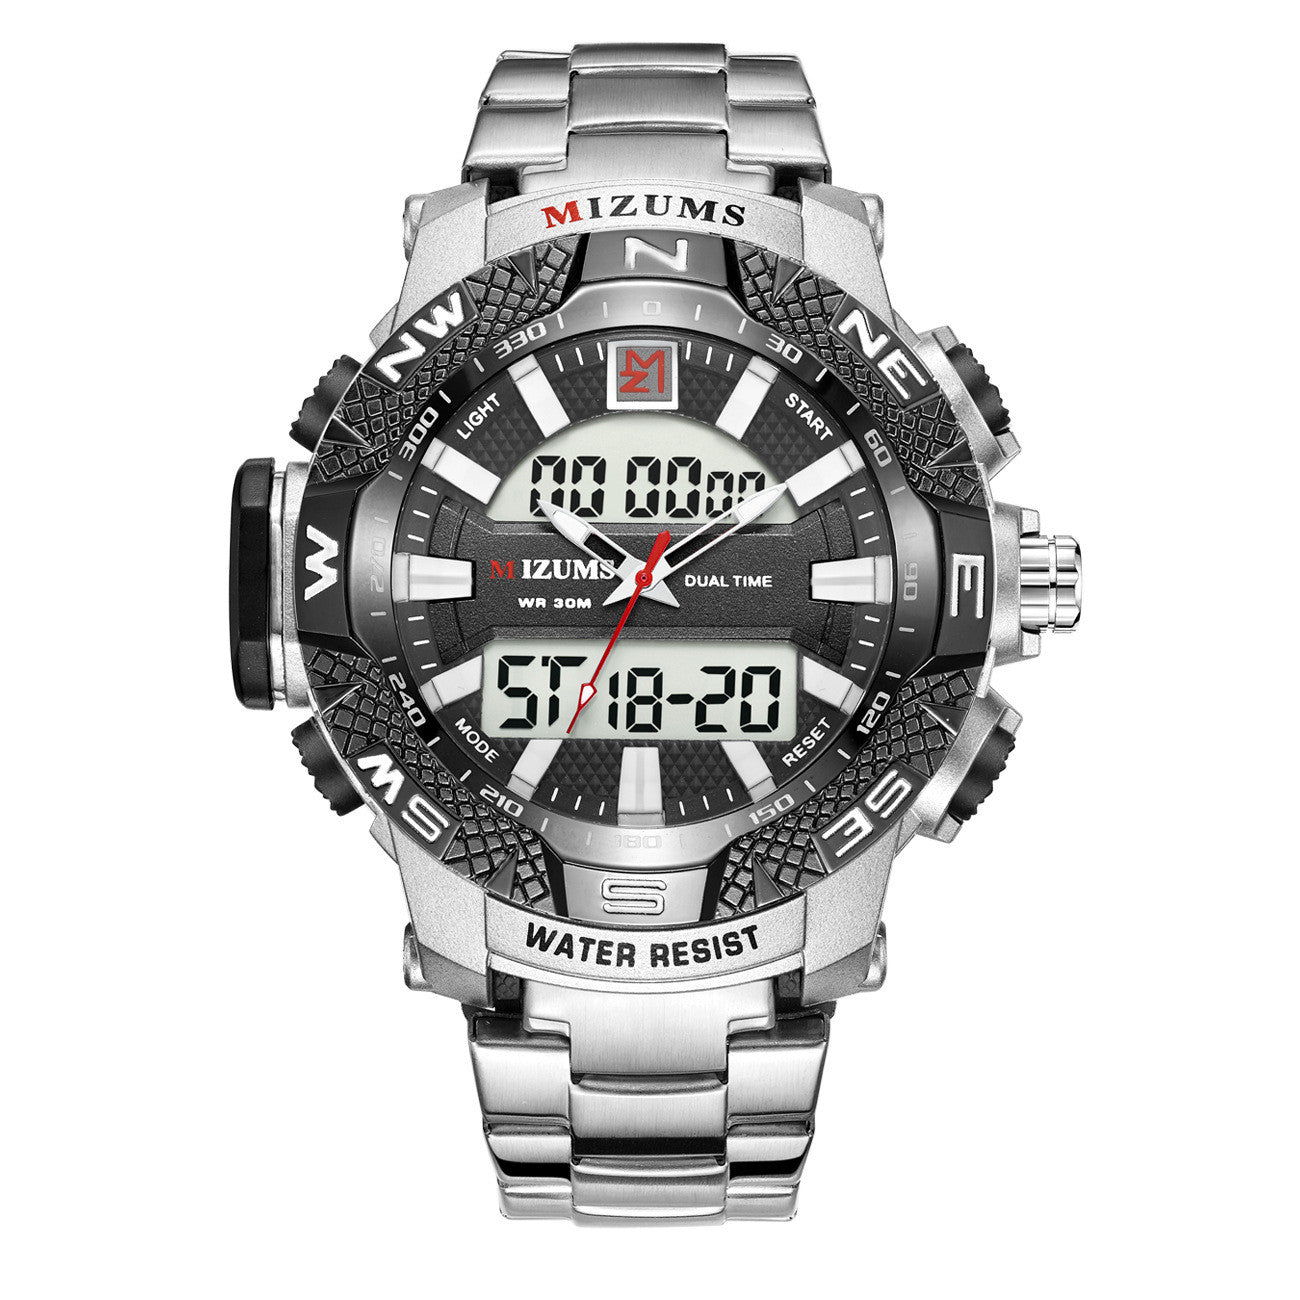 Dual Movement Electronic Watch Steel Band Quartz Watch